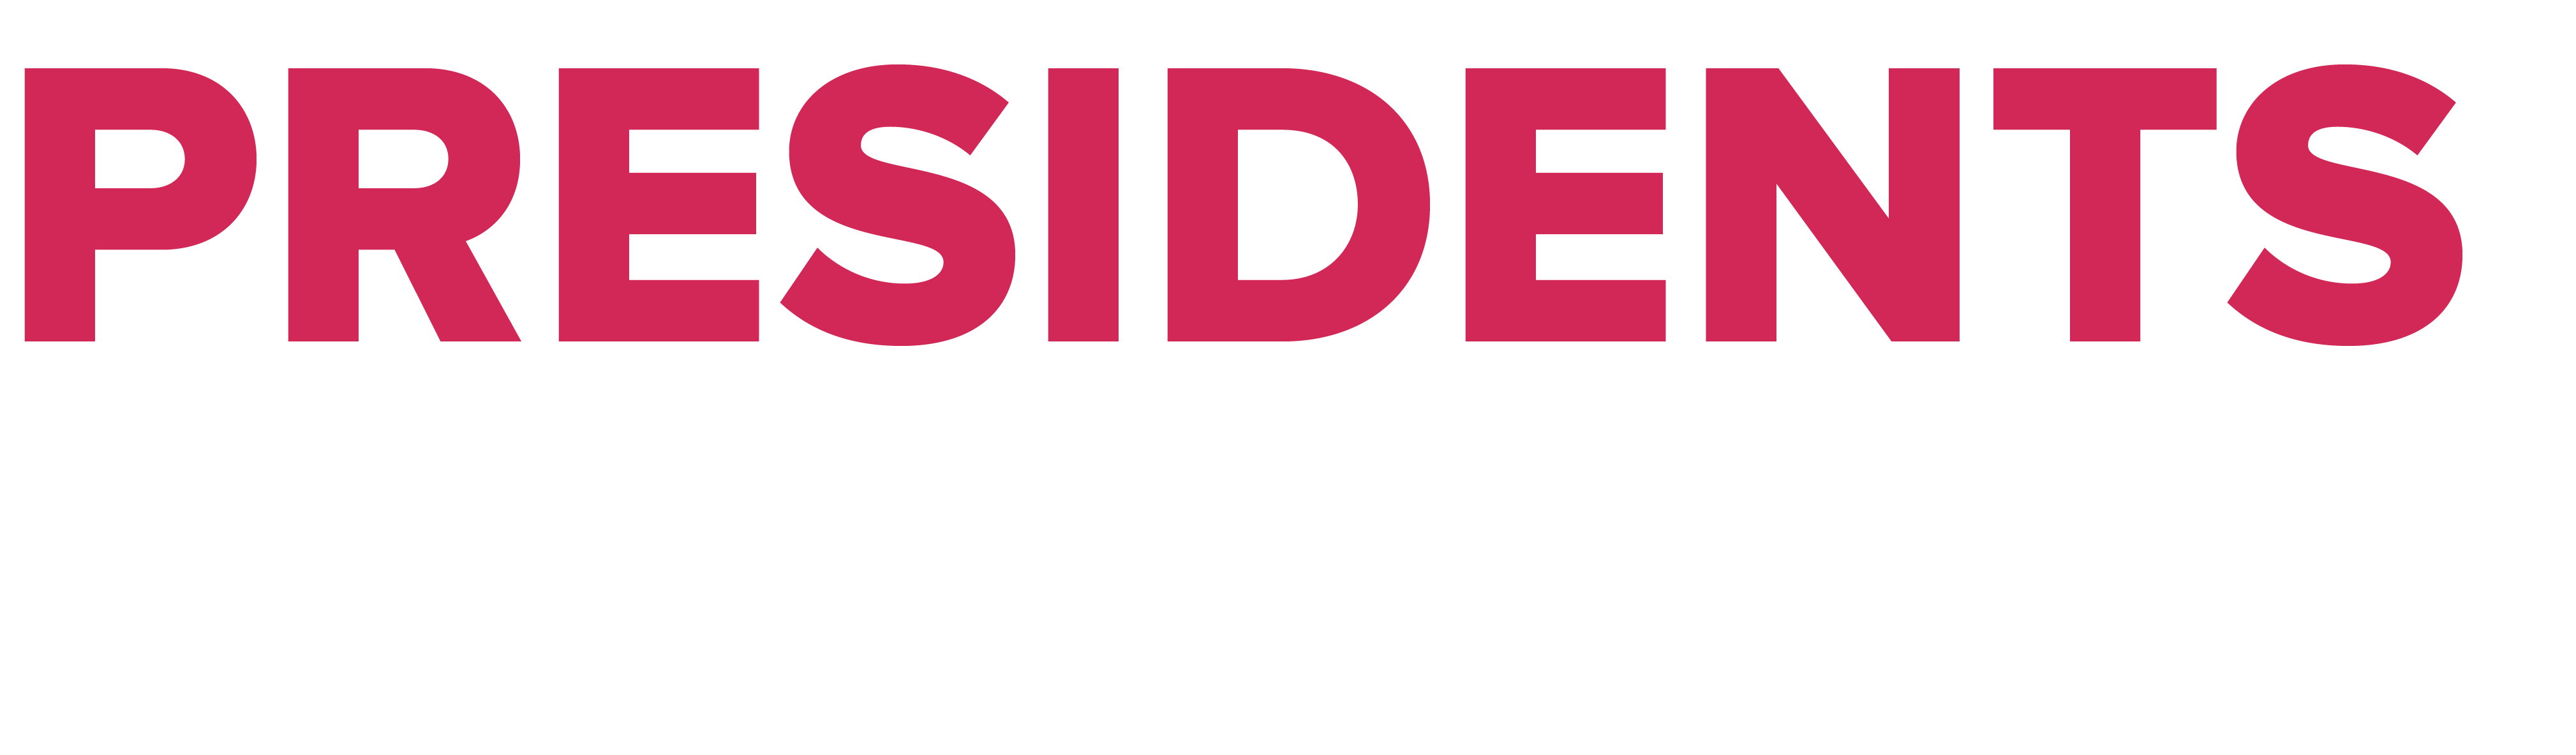 Presidents-Summit-Logo-Tex-02